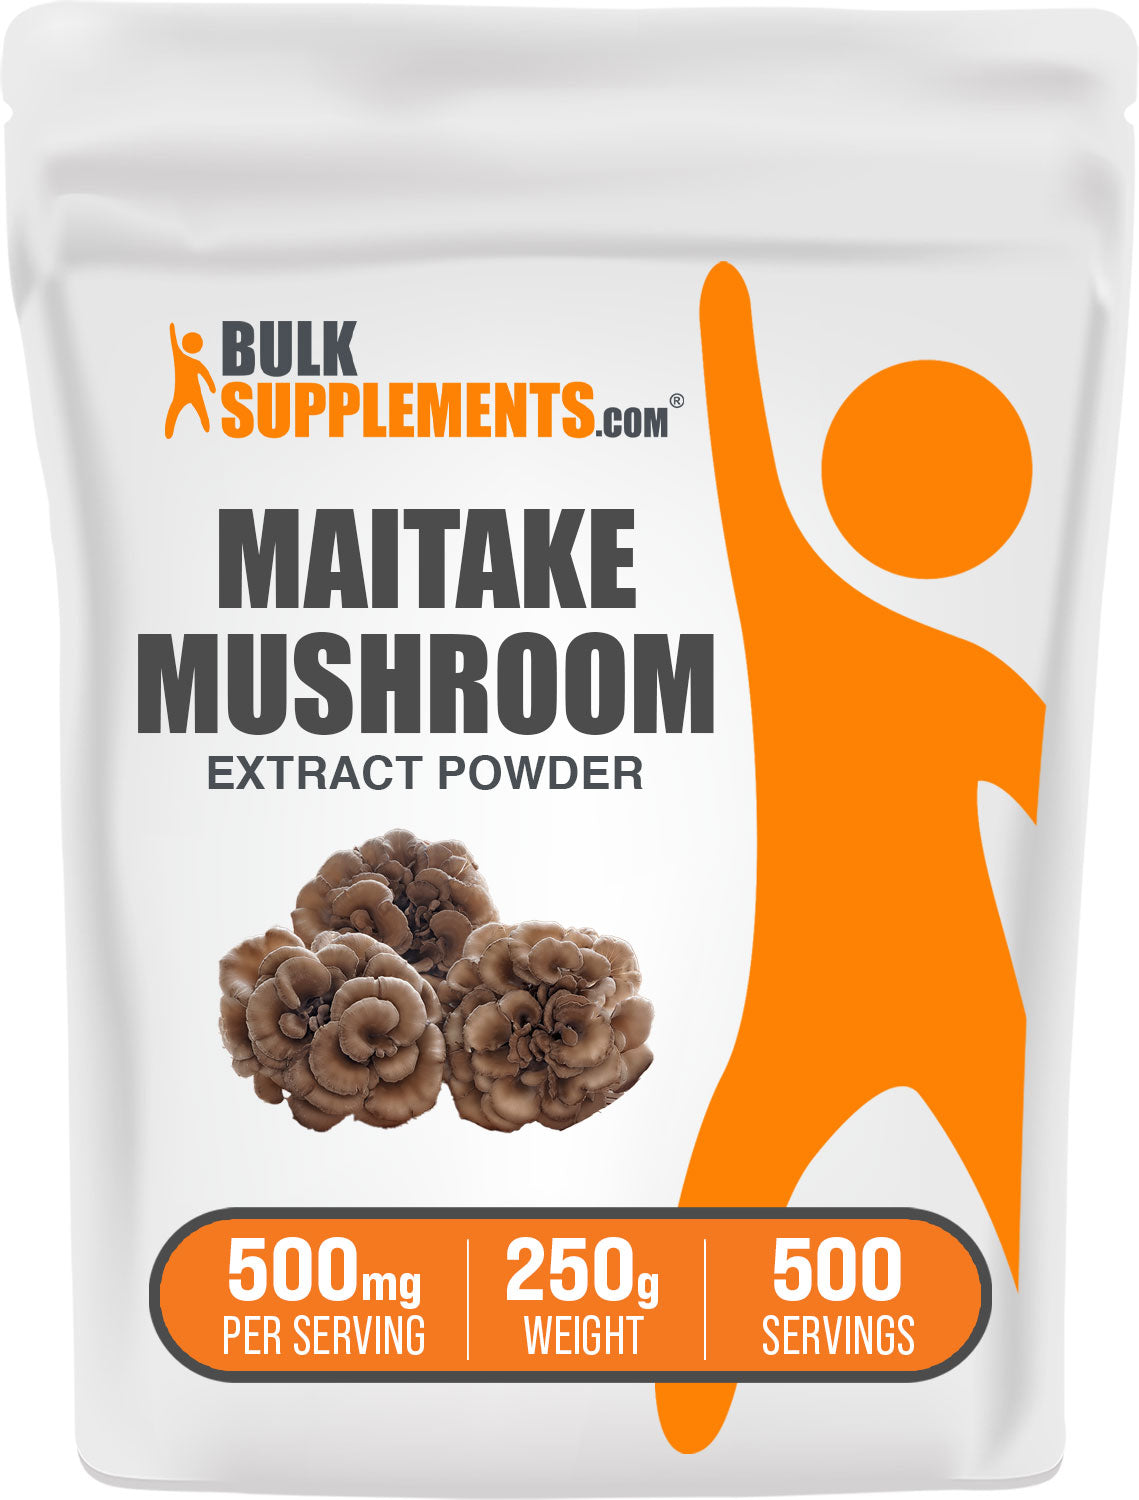 Maitake Mushroom Extract Powder 250g Bag